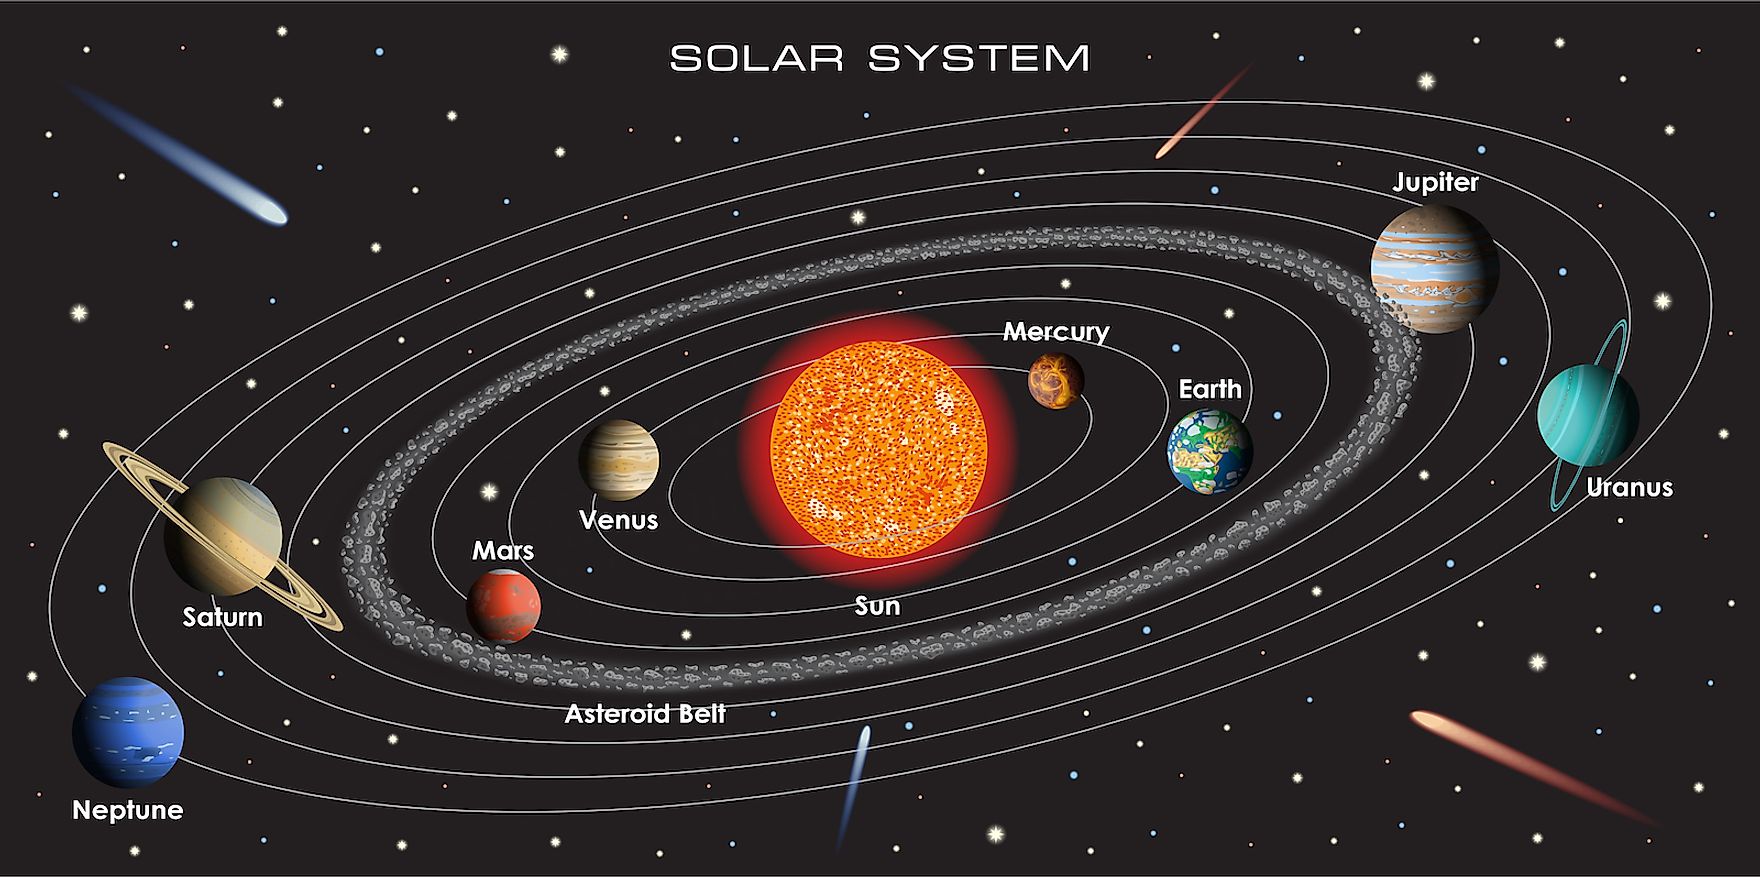 An illustration of the Solar System. Image credit: D1min/Shutterstock.com